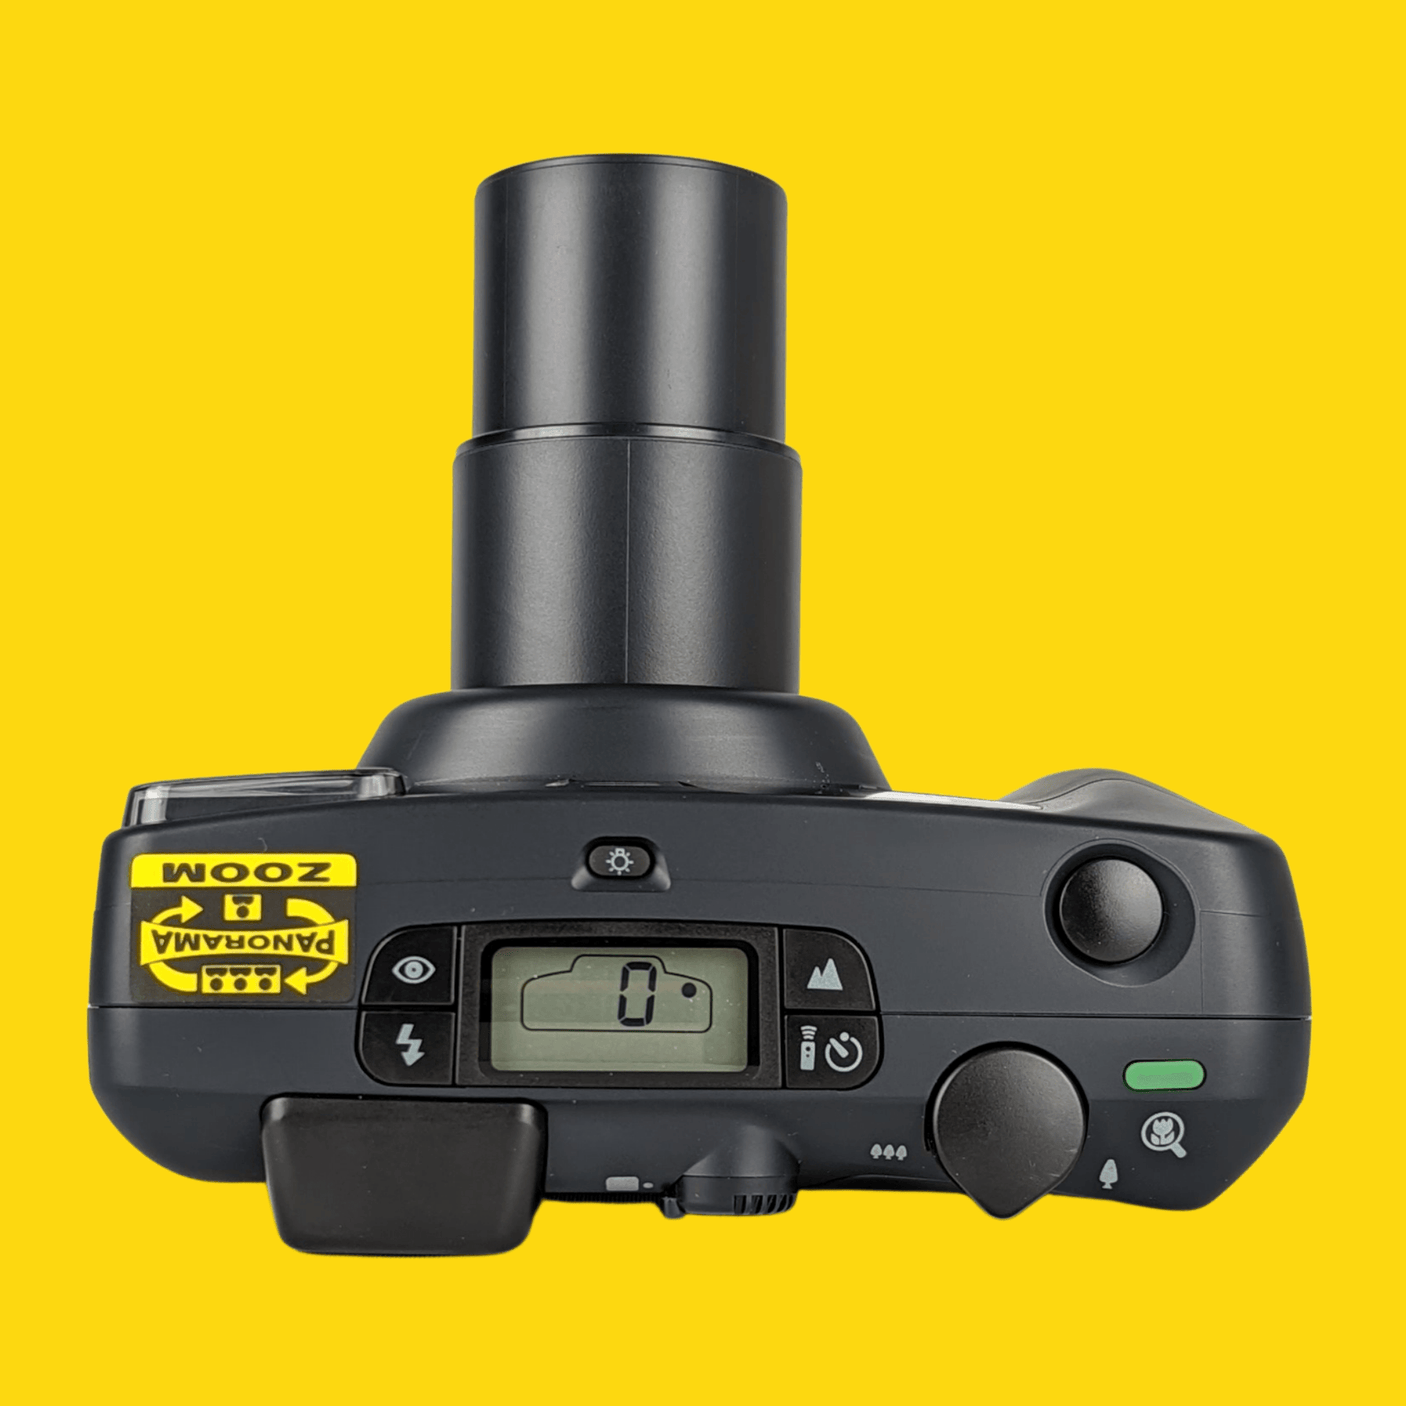 BRAND NEW - Pentax Espio 115 / IQZoom 115 35mm Film Camera Point and Shoot